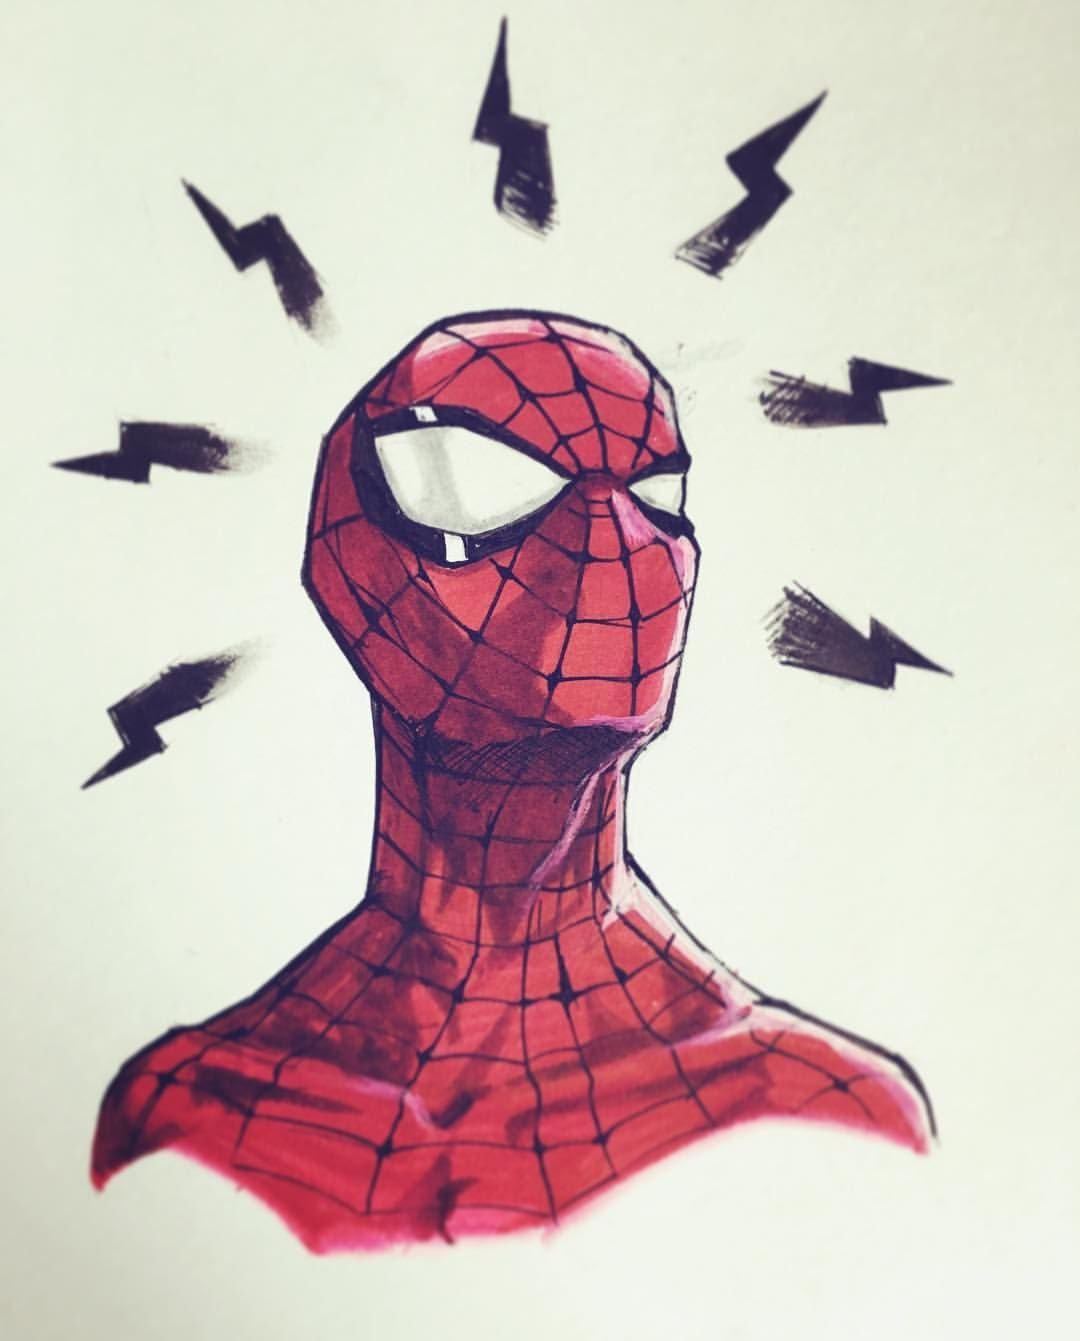 Картинки человека паука для срисовки - 81 фото